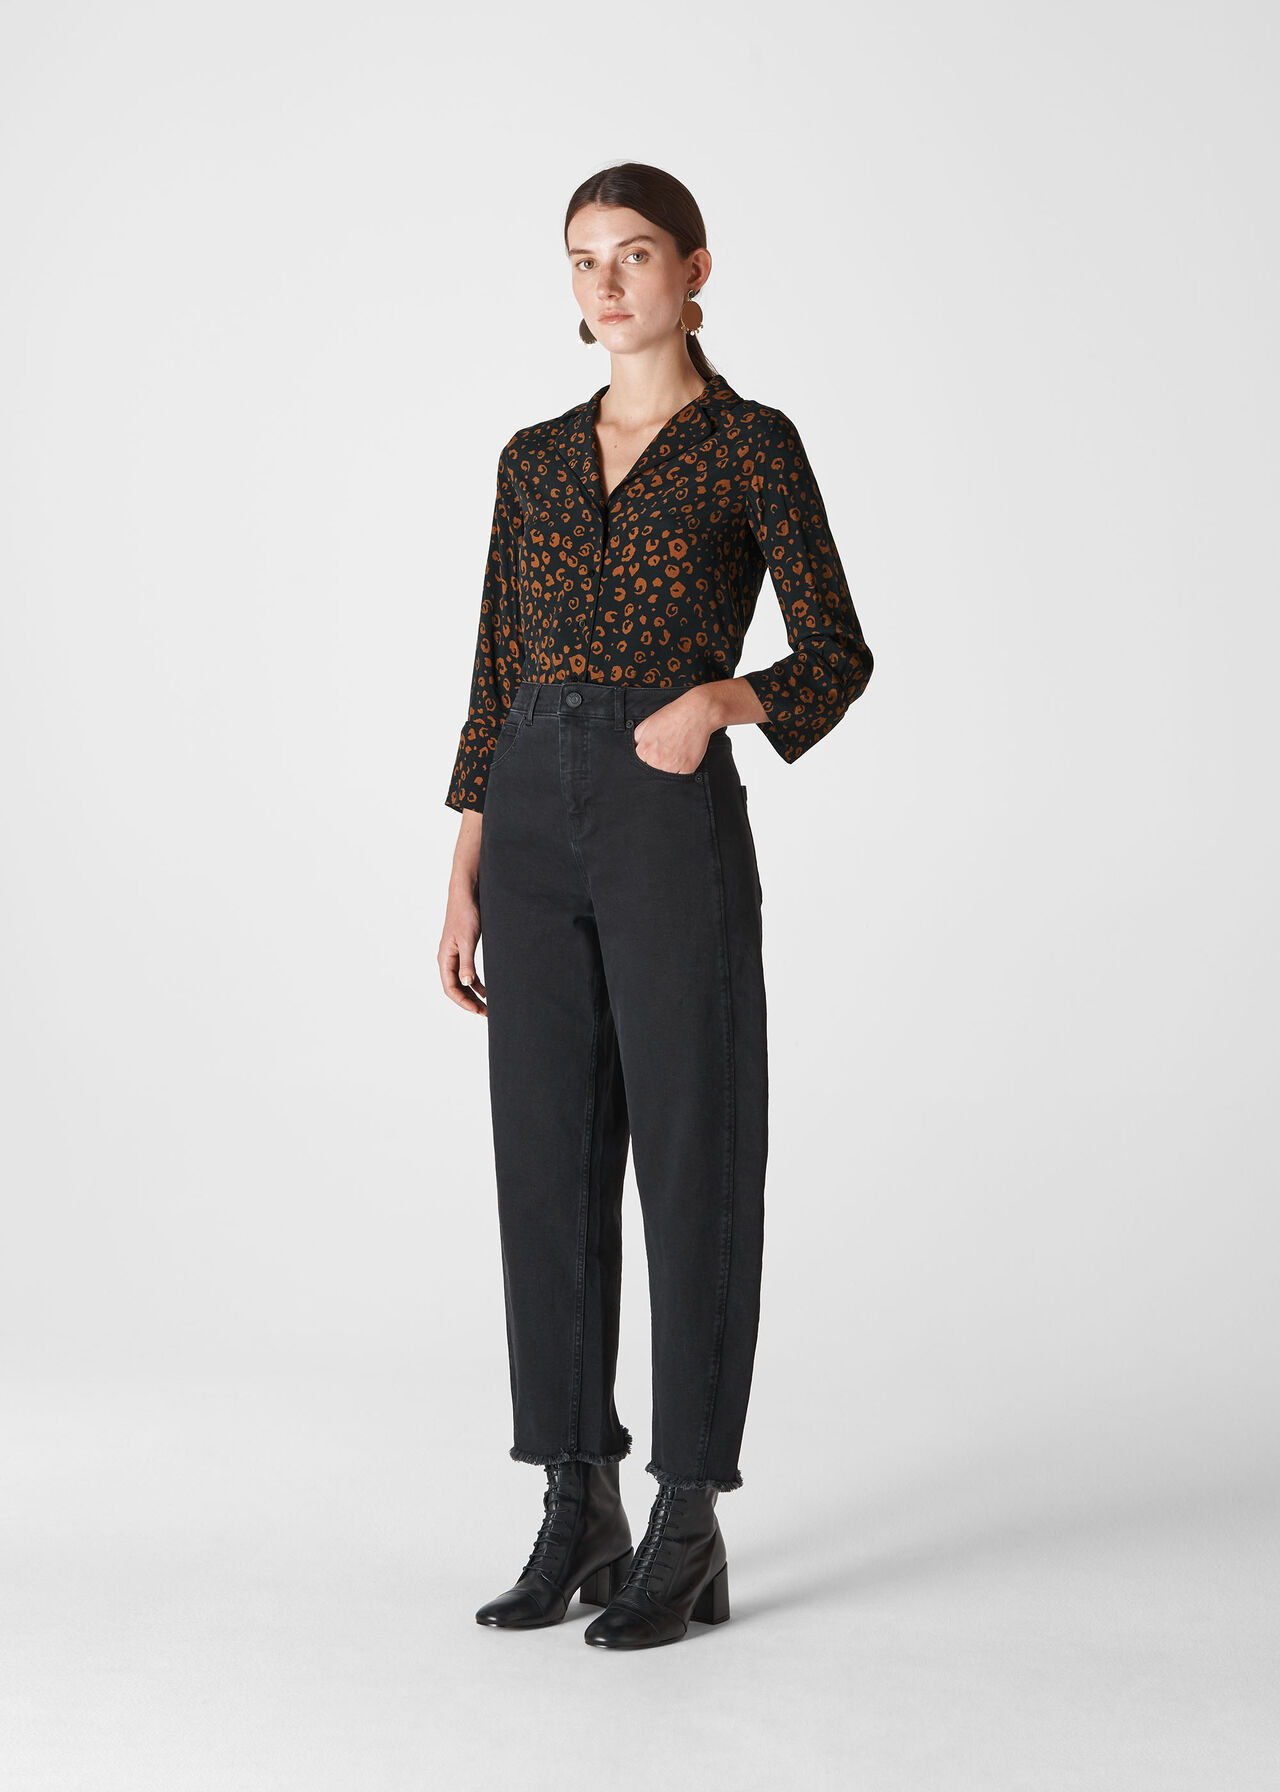 Cheetah Print Pyjama Shirt Black/Multi